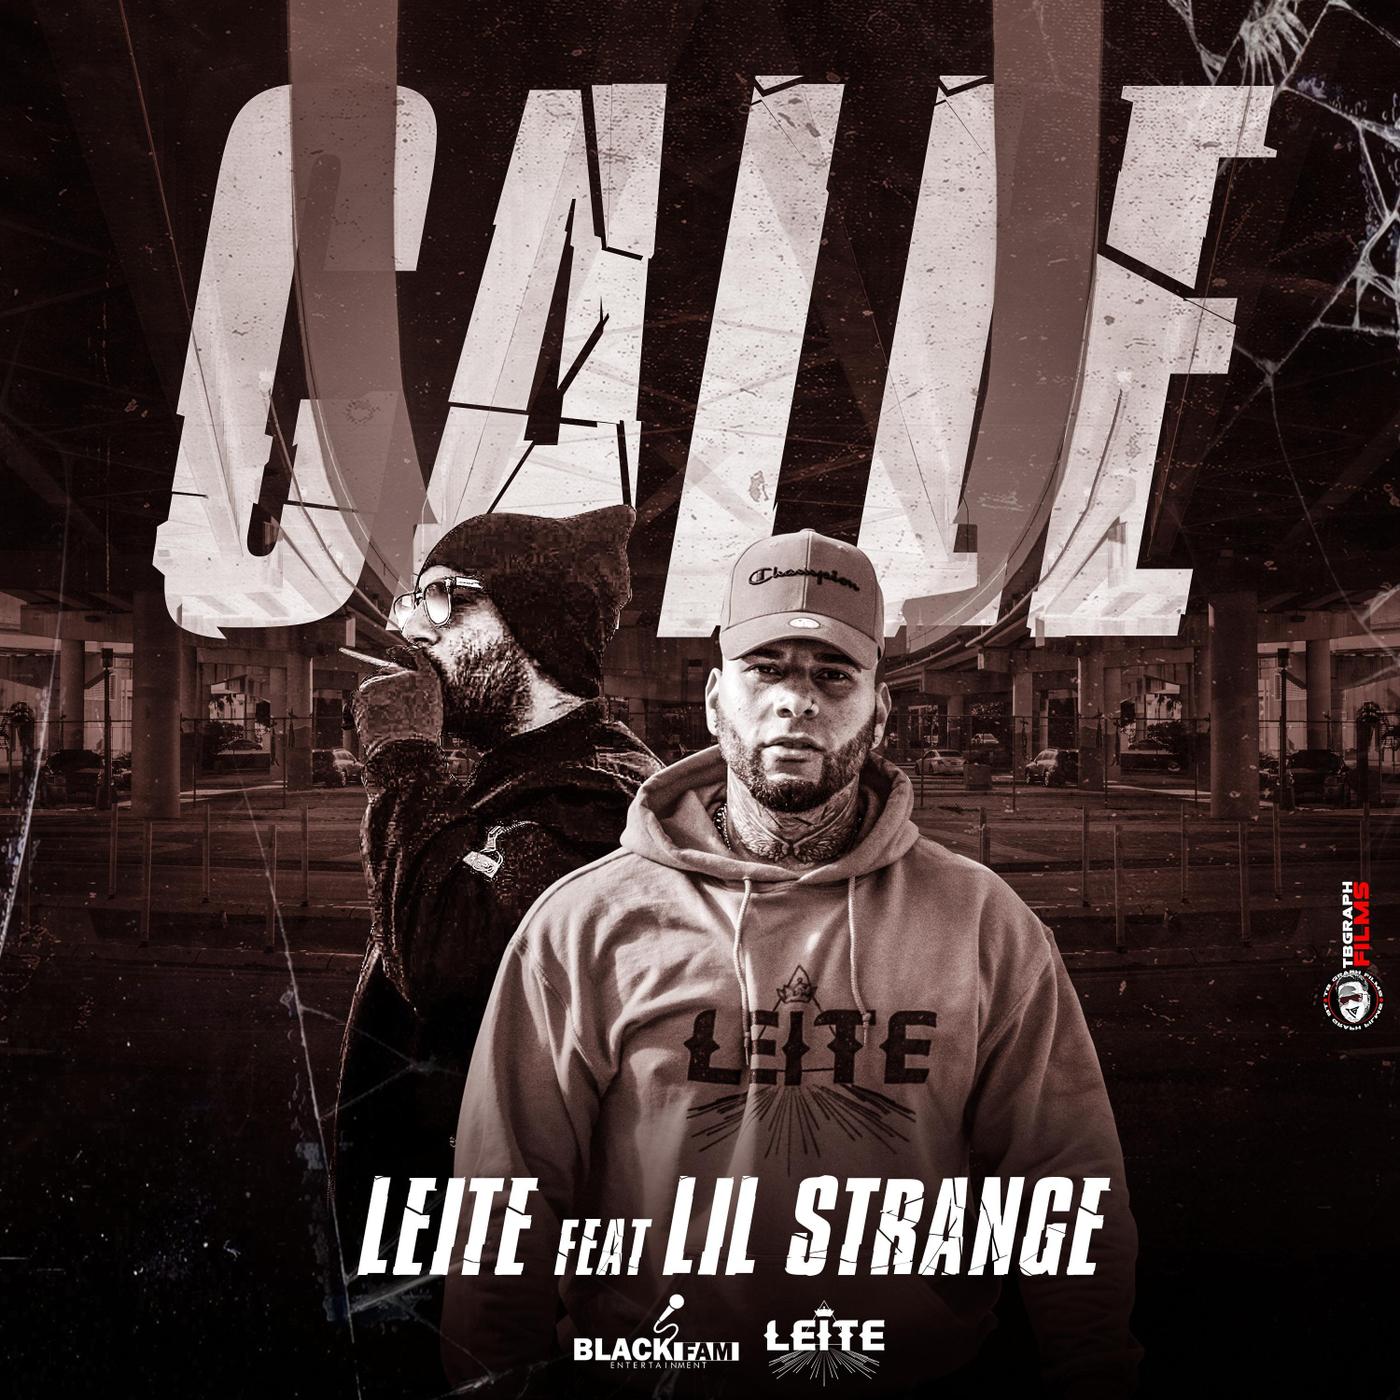 Leite - Calle (feat. Lilstrange)